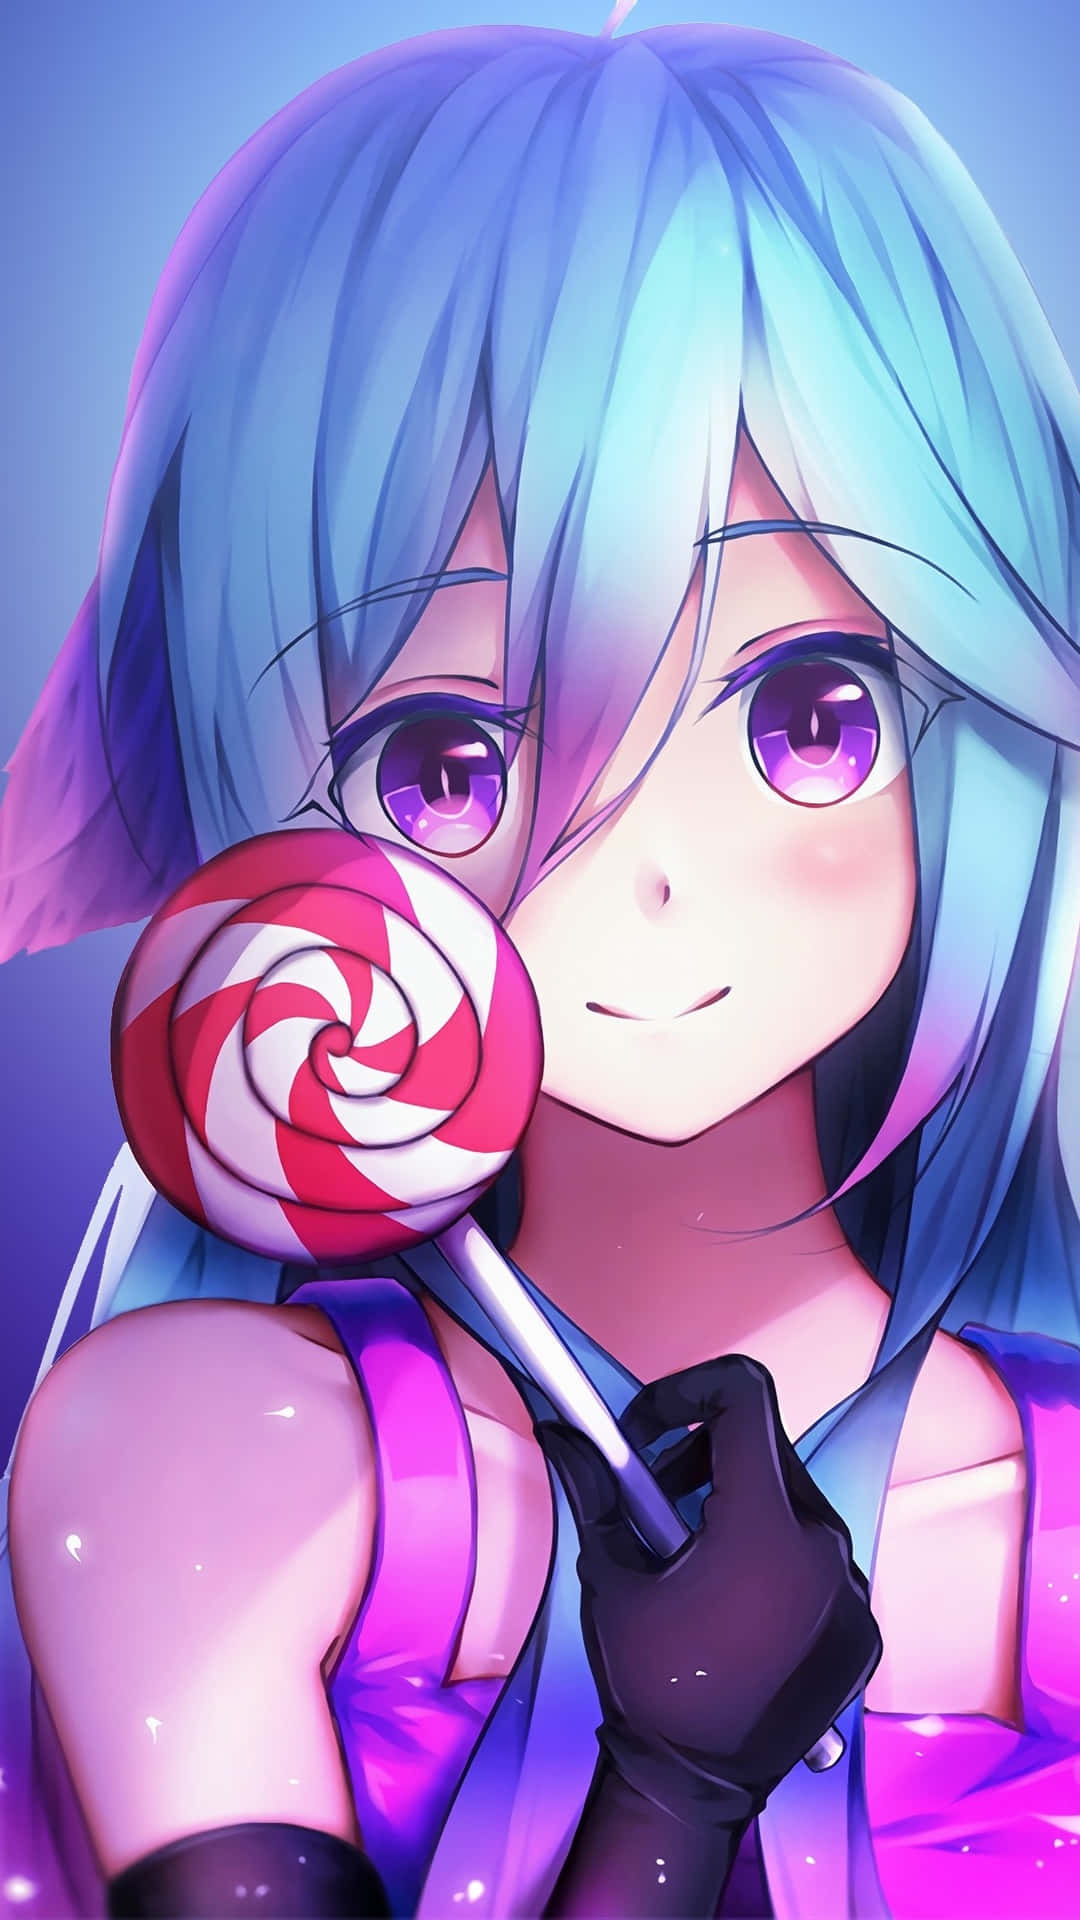 Cute Kawaii Anime Girl With Lollipop Background